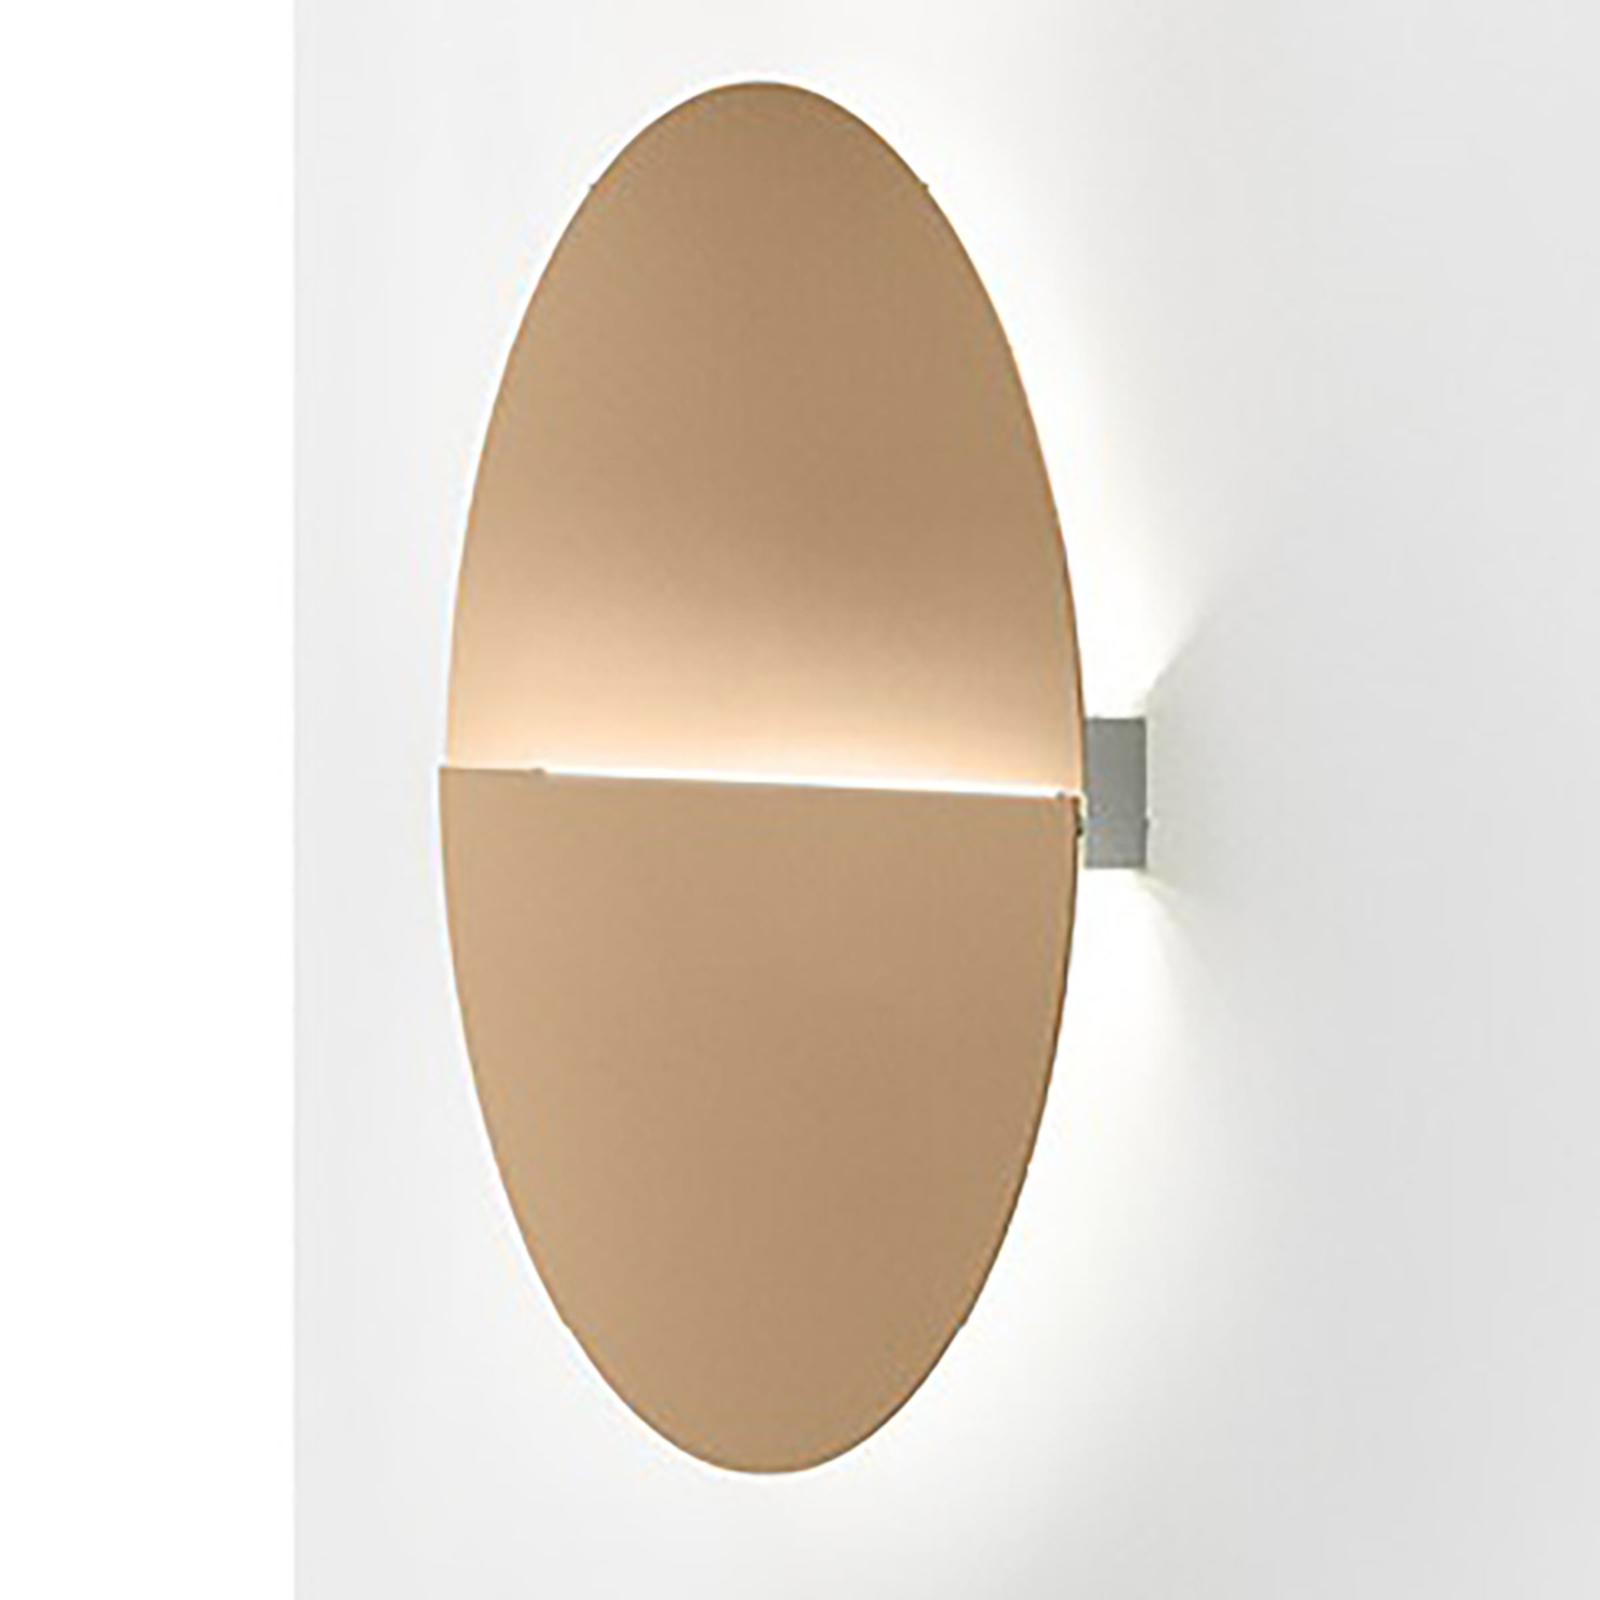 Modo Luce LED wandlamp Ø 54cm mat goud